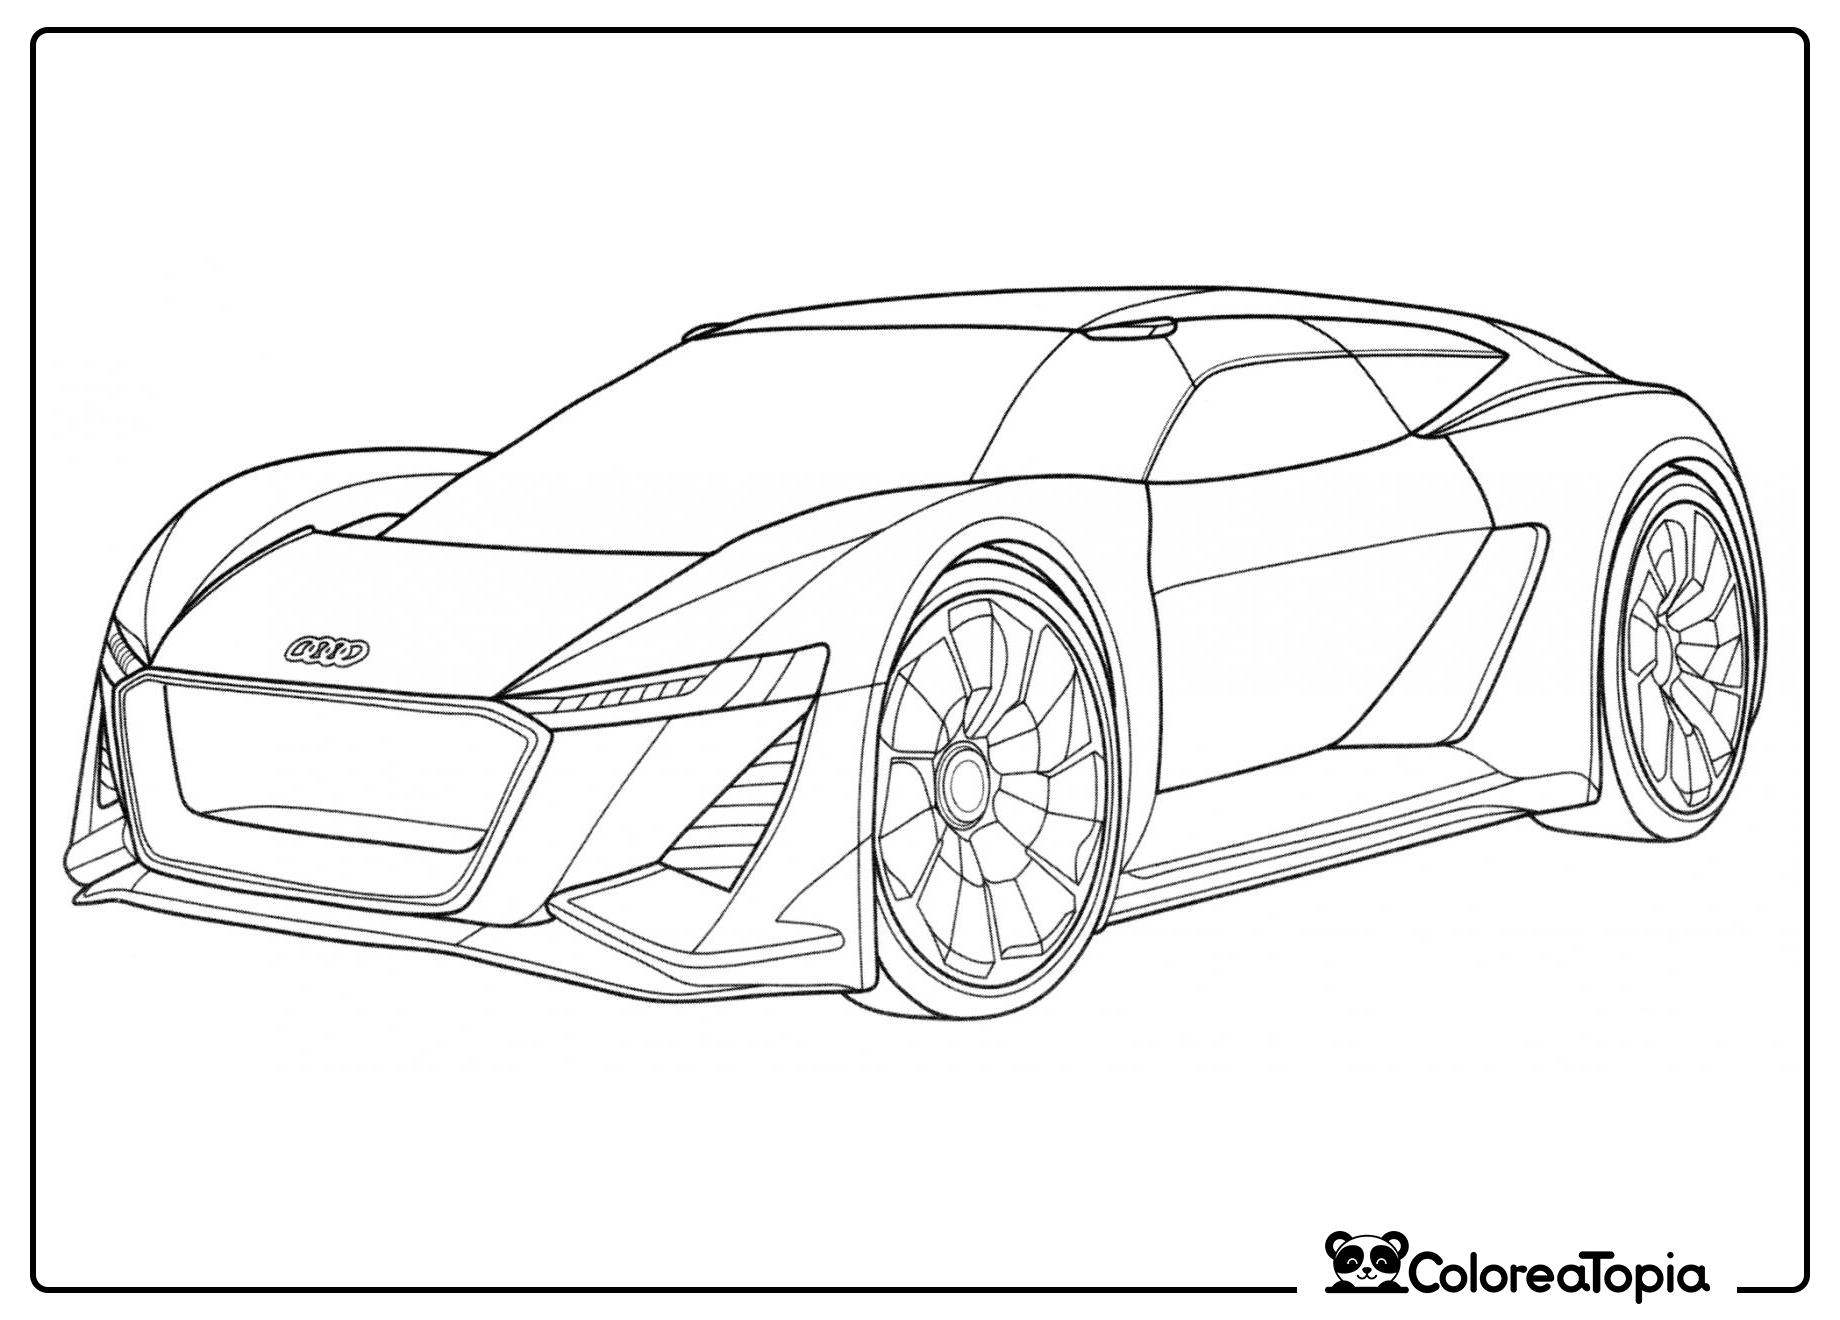 Audi PB18 - dibujo para colorear